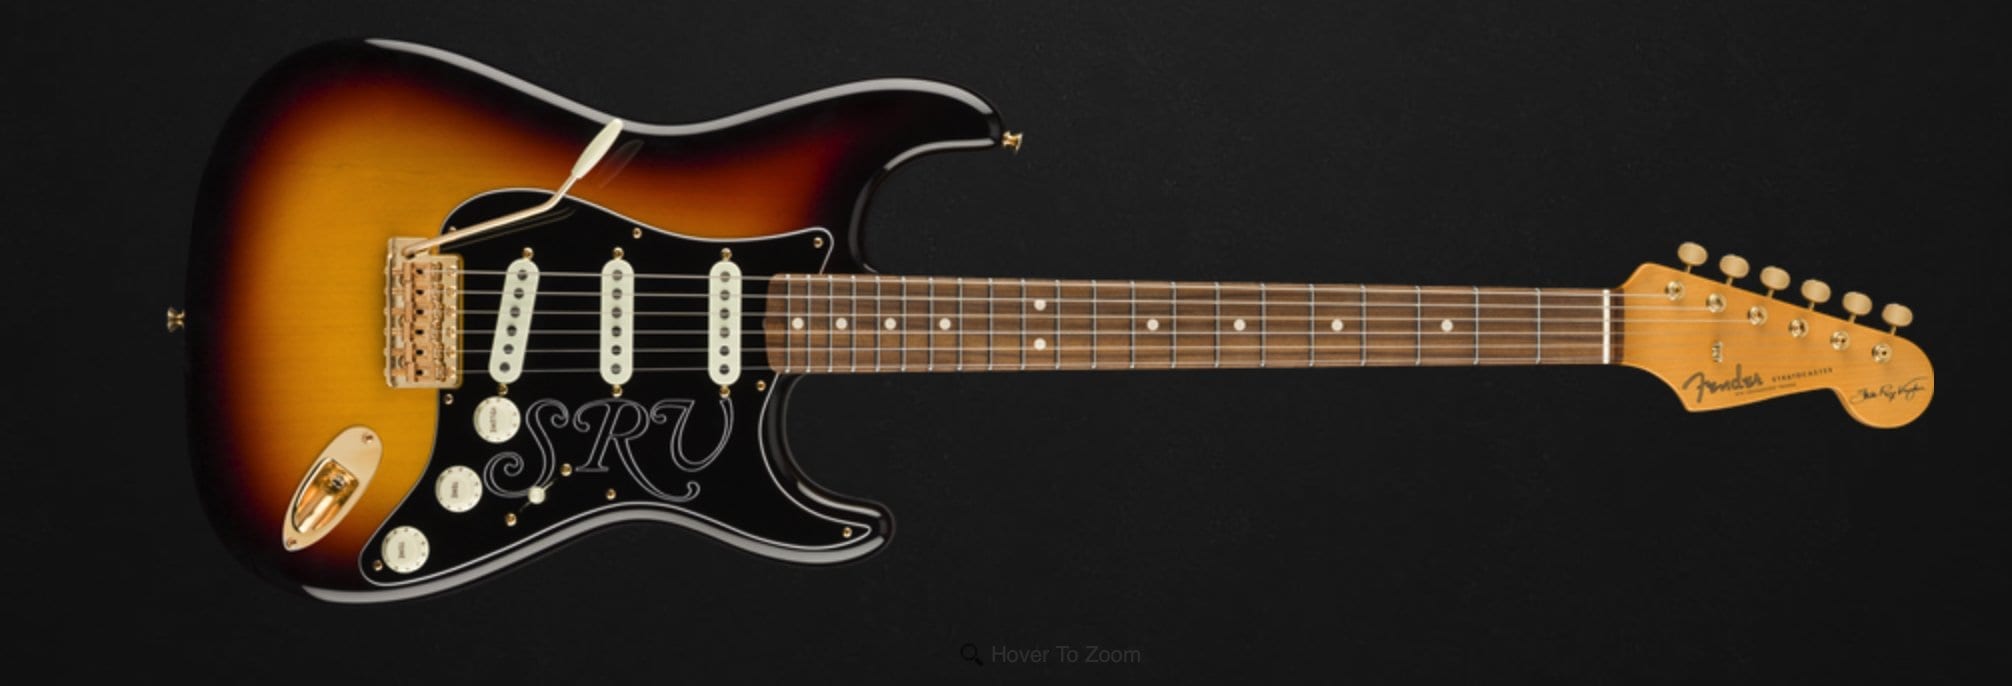 Fender Custom Shop Stevie Ray Vaughan Signature Stratocaster 2019